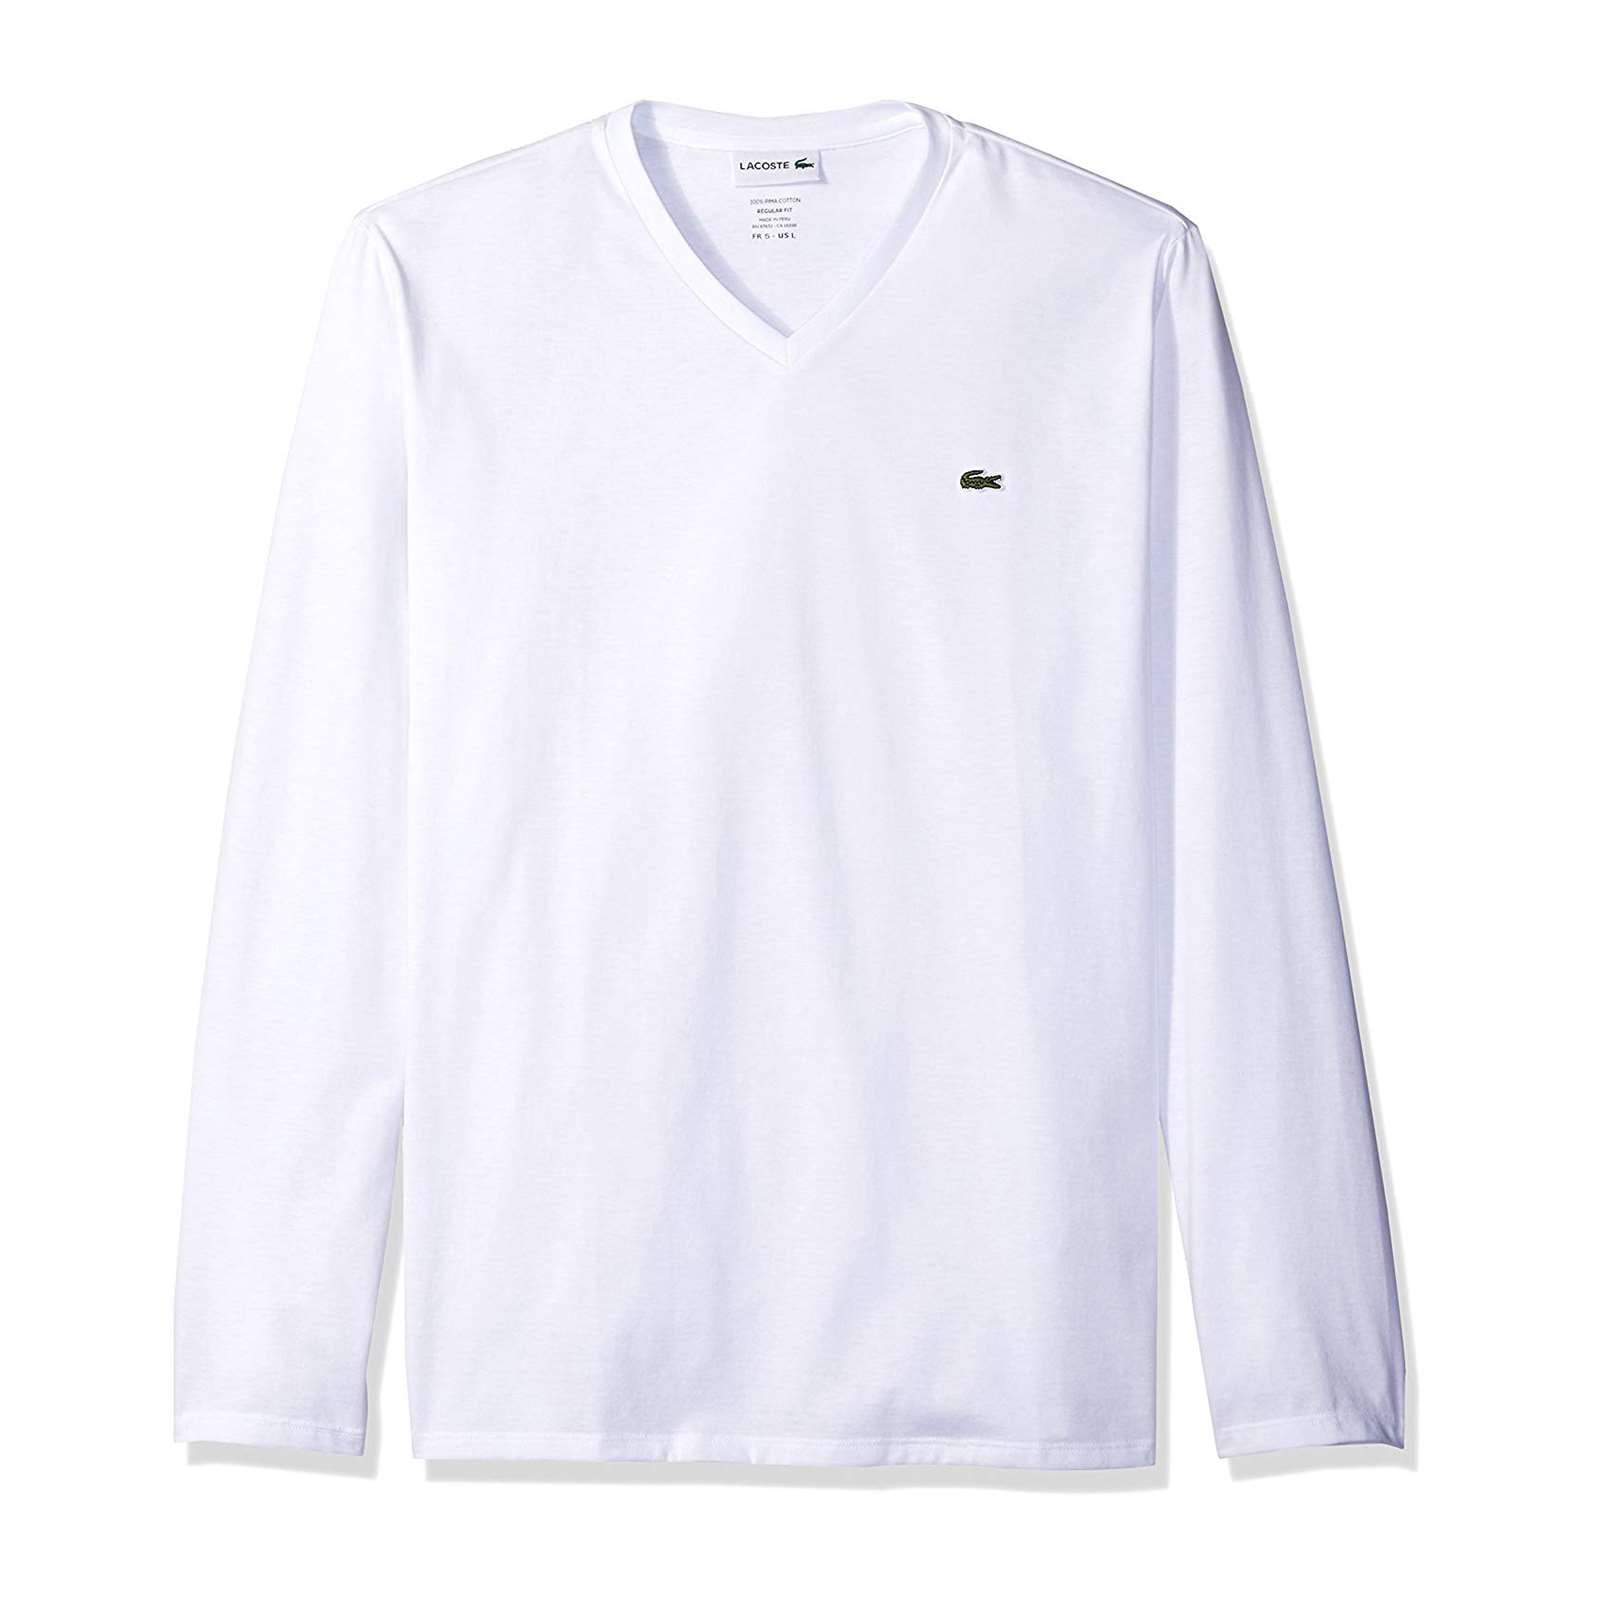 Lacoste Men's Long Sleeve 100% Pima Cotton V-Neck T-Shirt Basic Tee ...